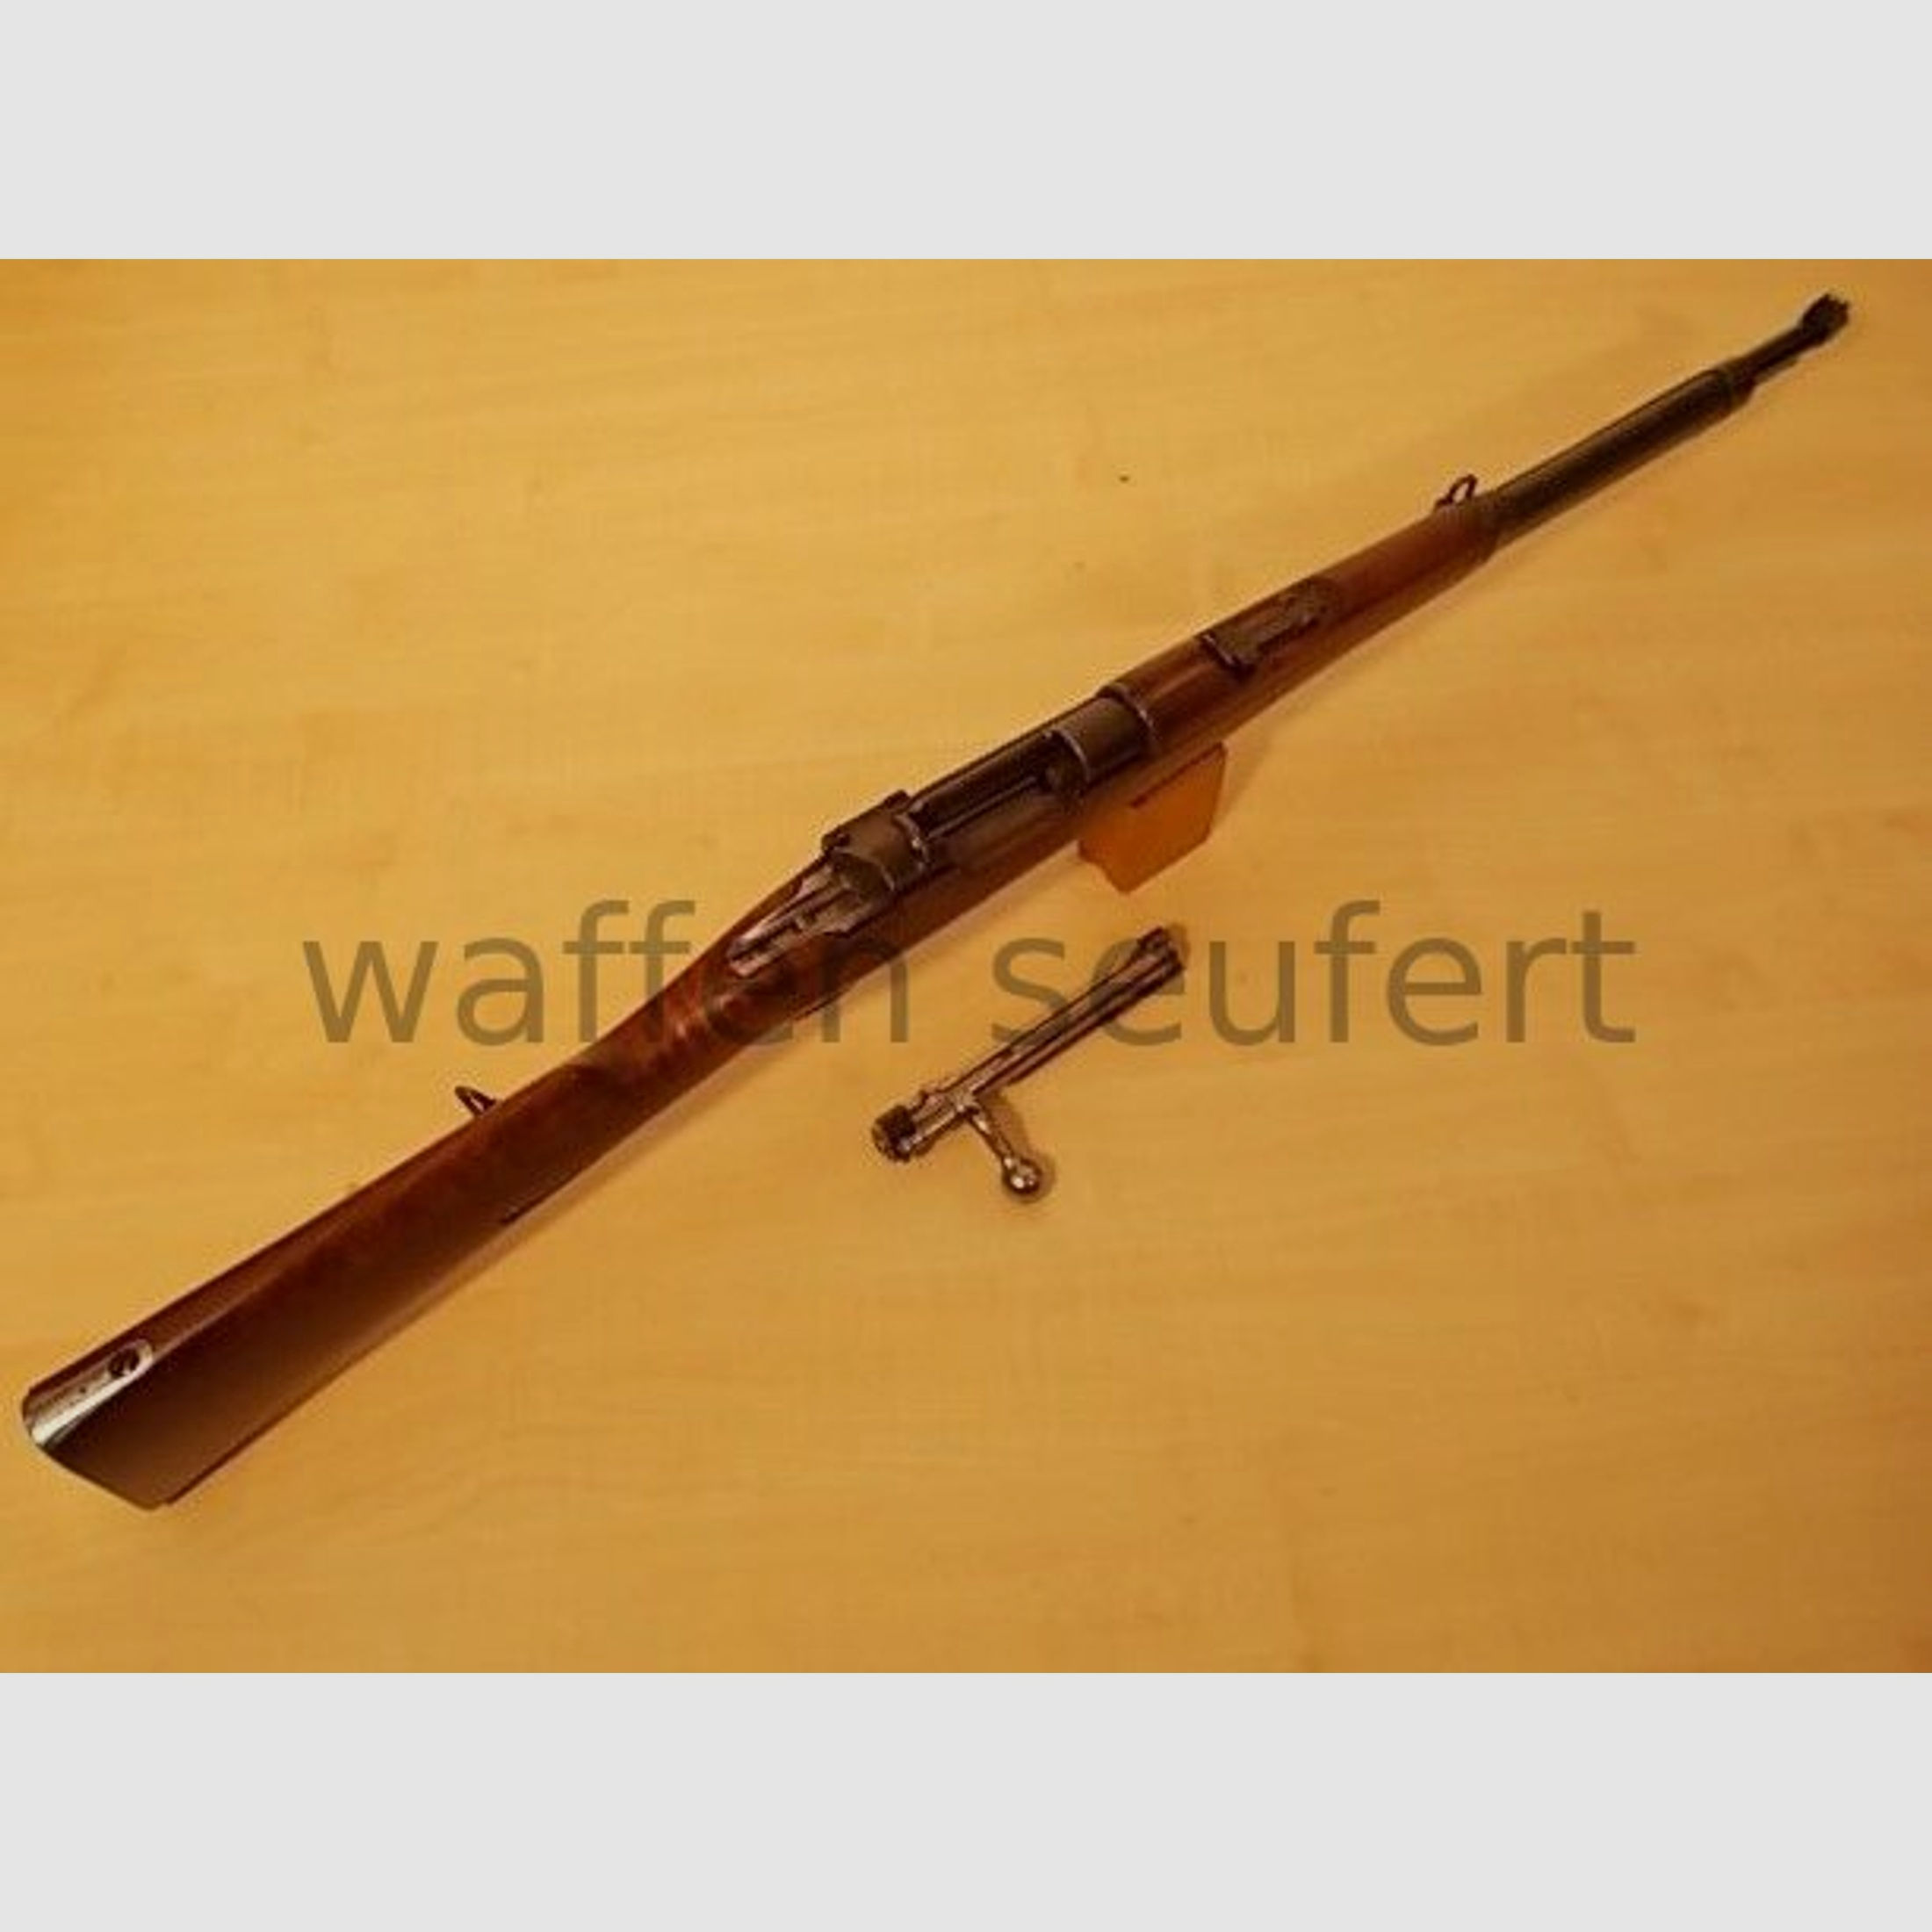 Mauser Chileno Modelo 1895 Kurzgewehr (Musketon)